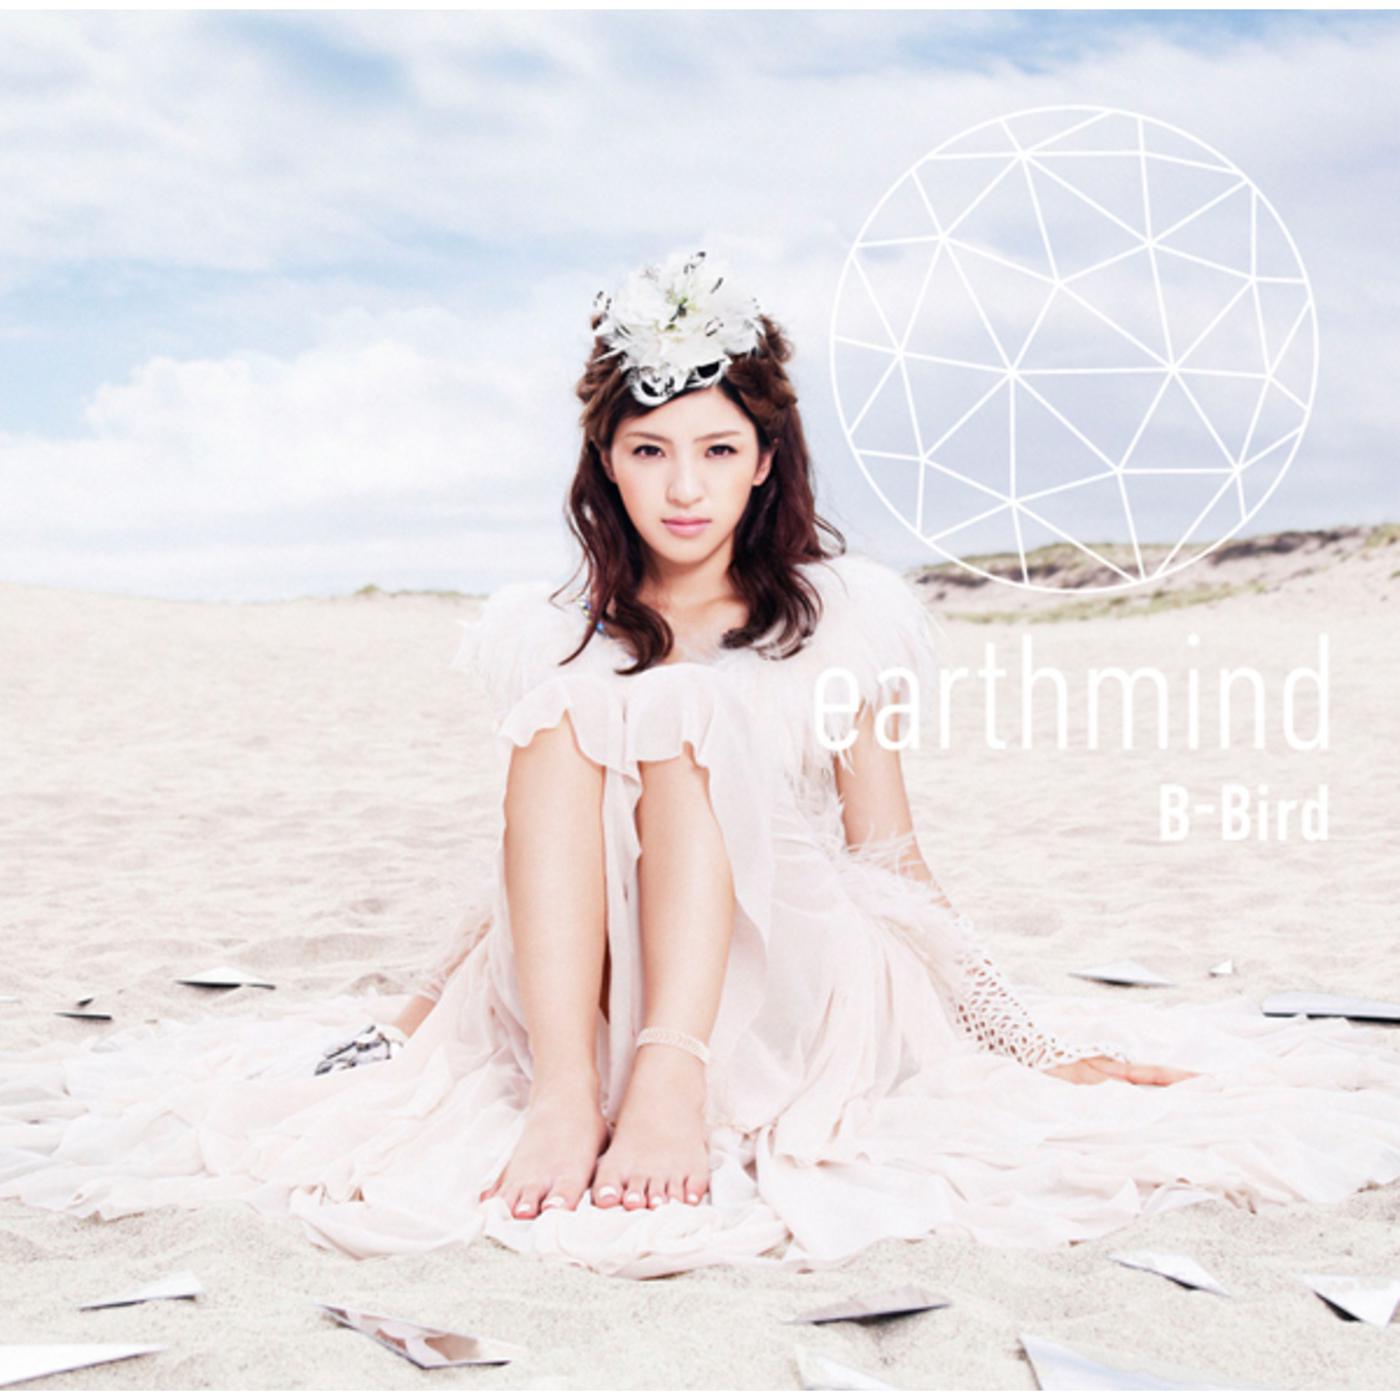 earthmind - B-Bird -Instrumental-